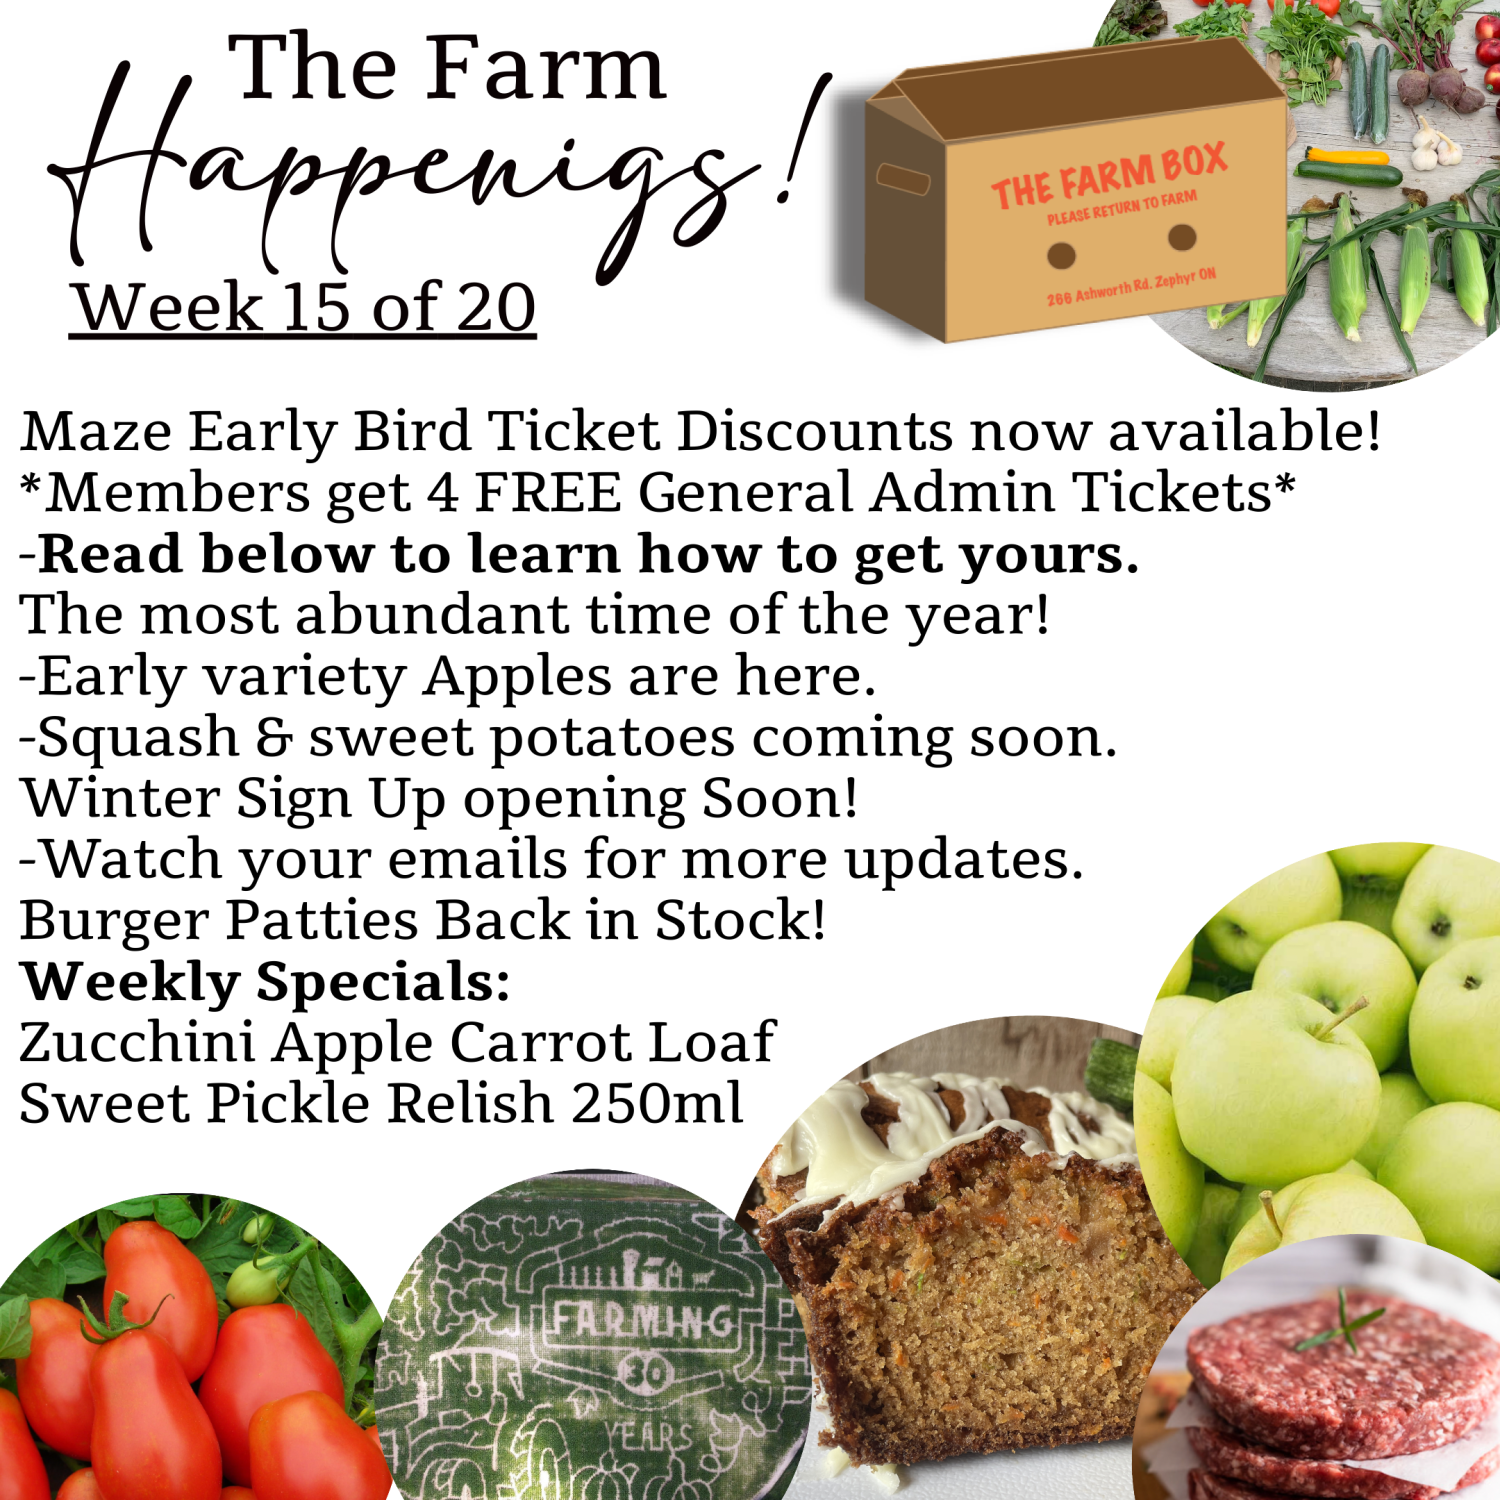 "The Farm Box"-Coopers CSA Farm Farm Happenings Week 15